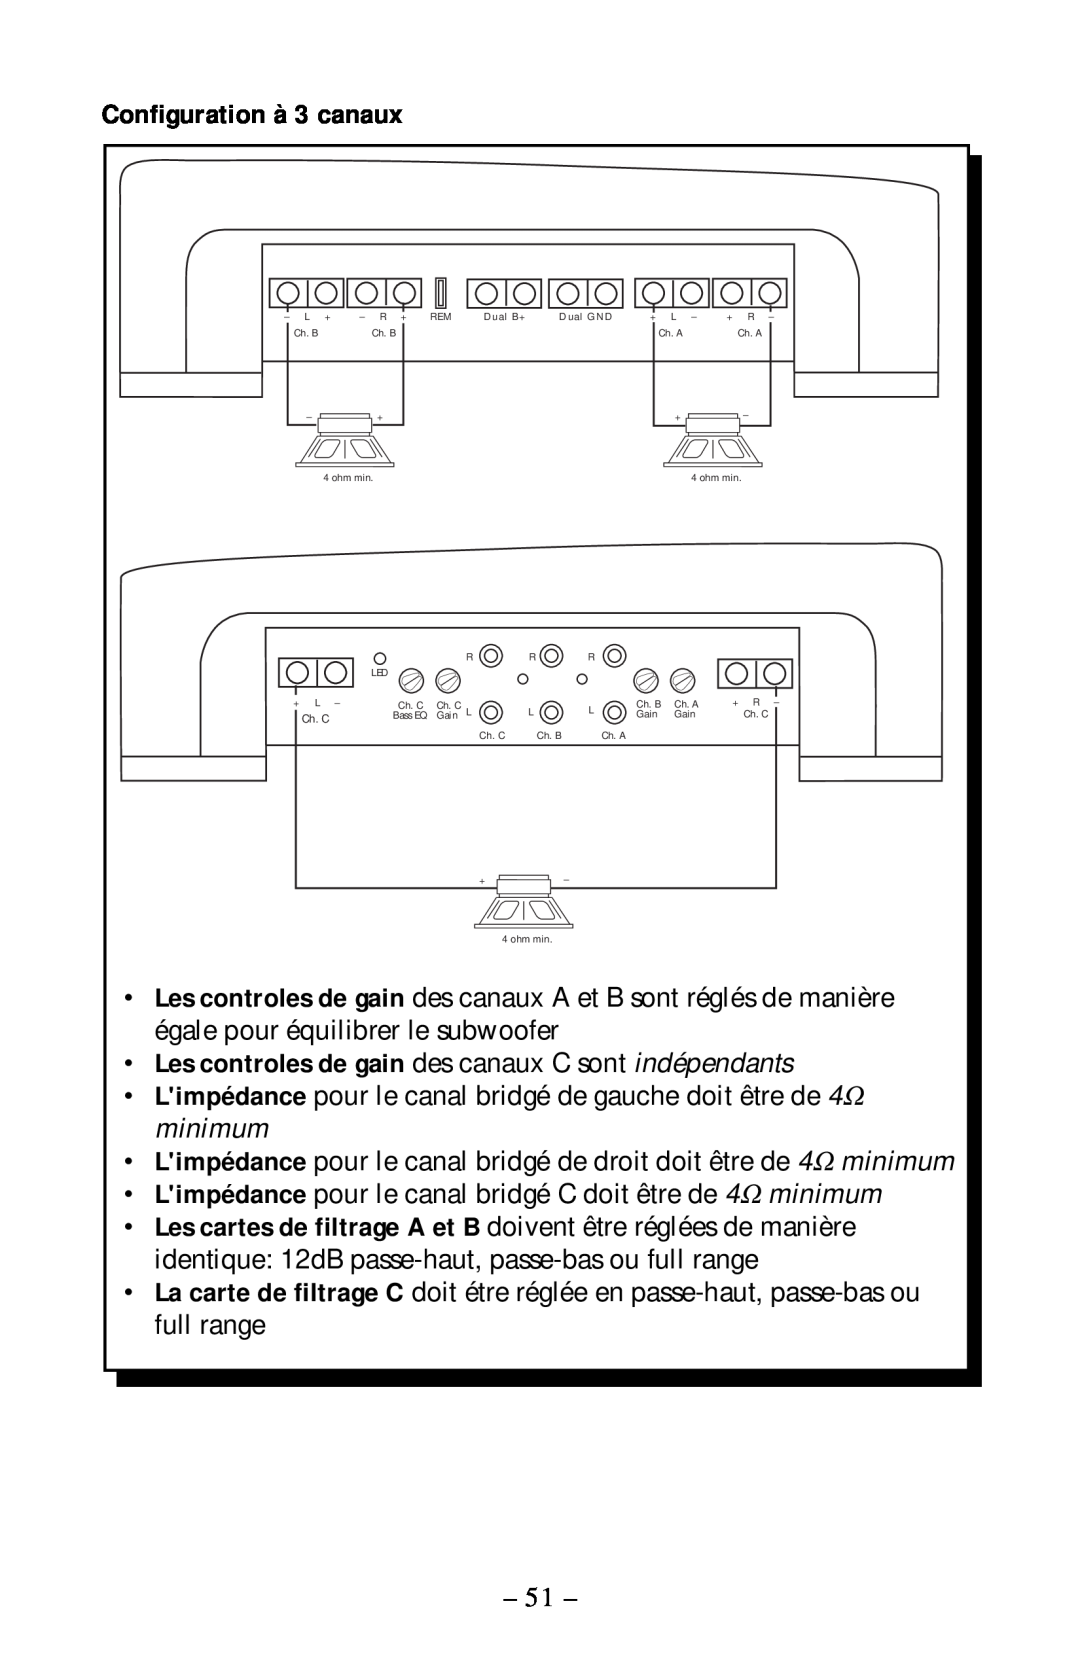 Rockford Fosgate 360.6 manual Configuration à 3 canaux 